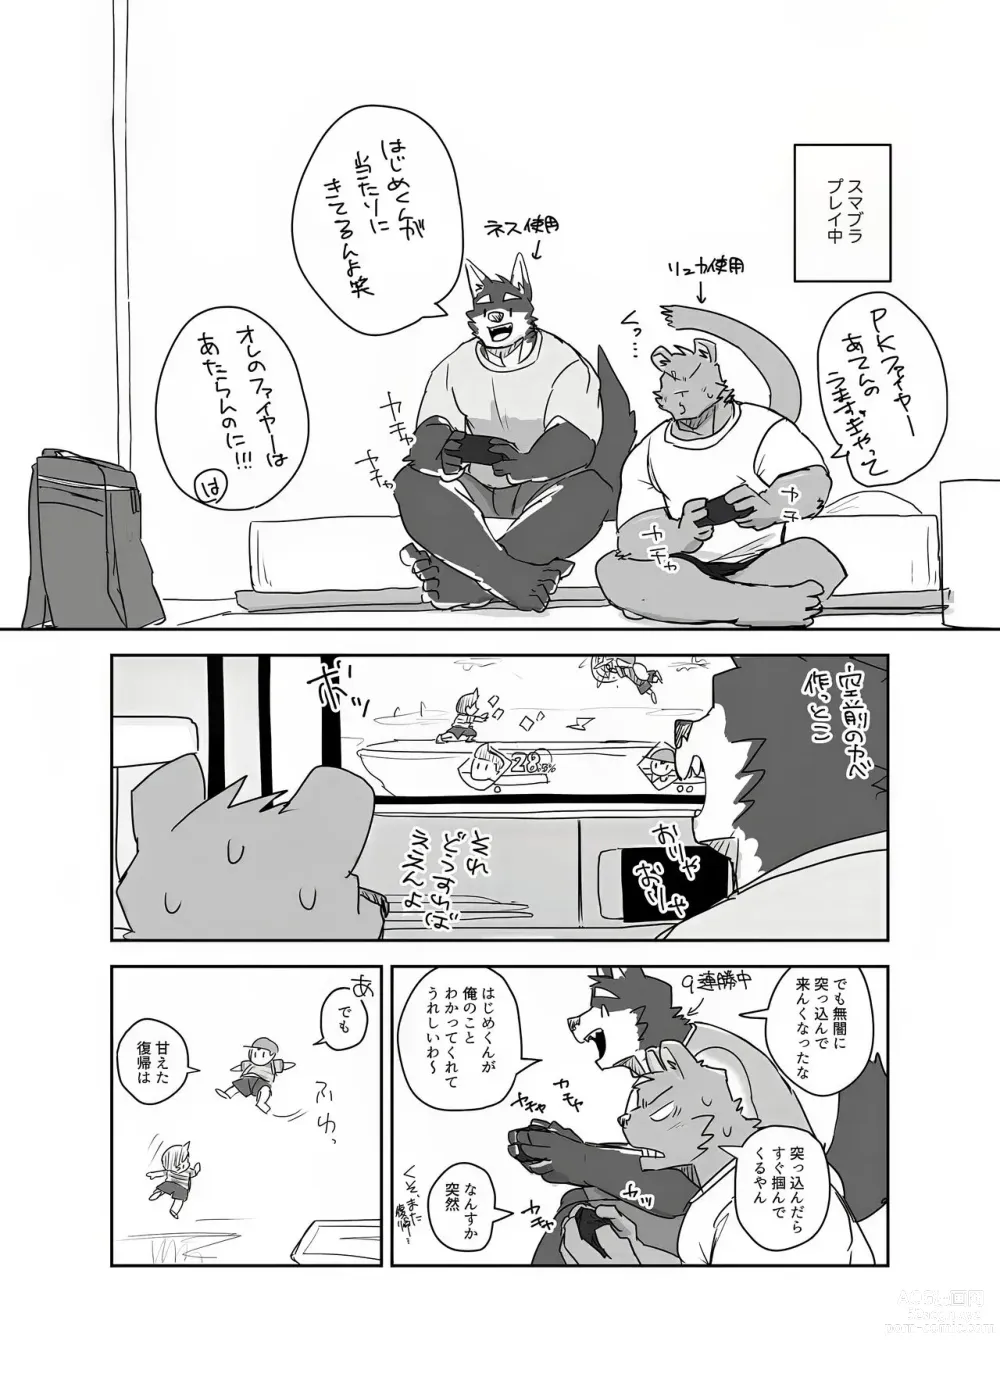 Page 2 of doujinshi 梅雨の日